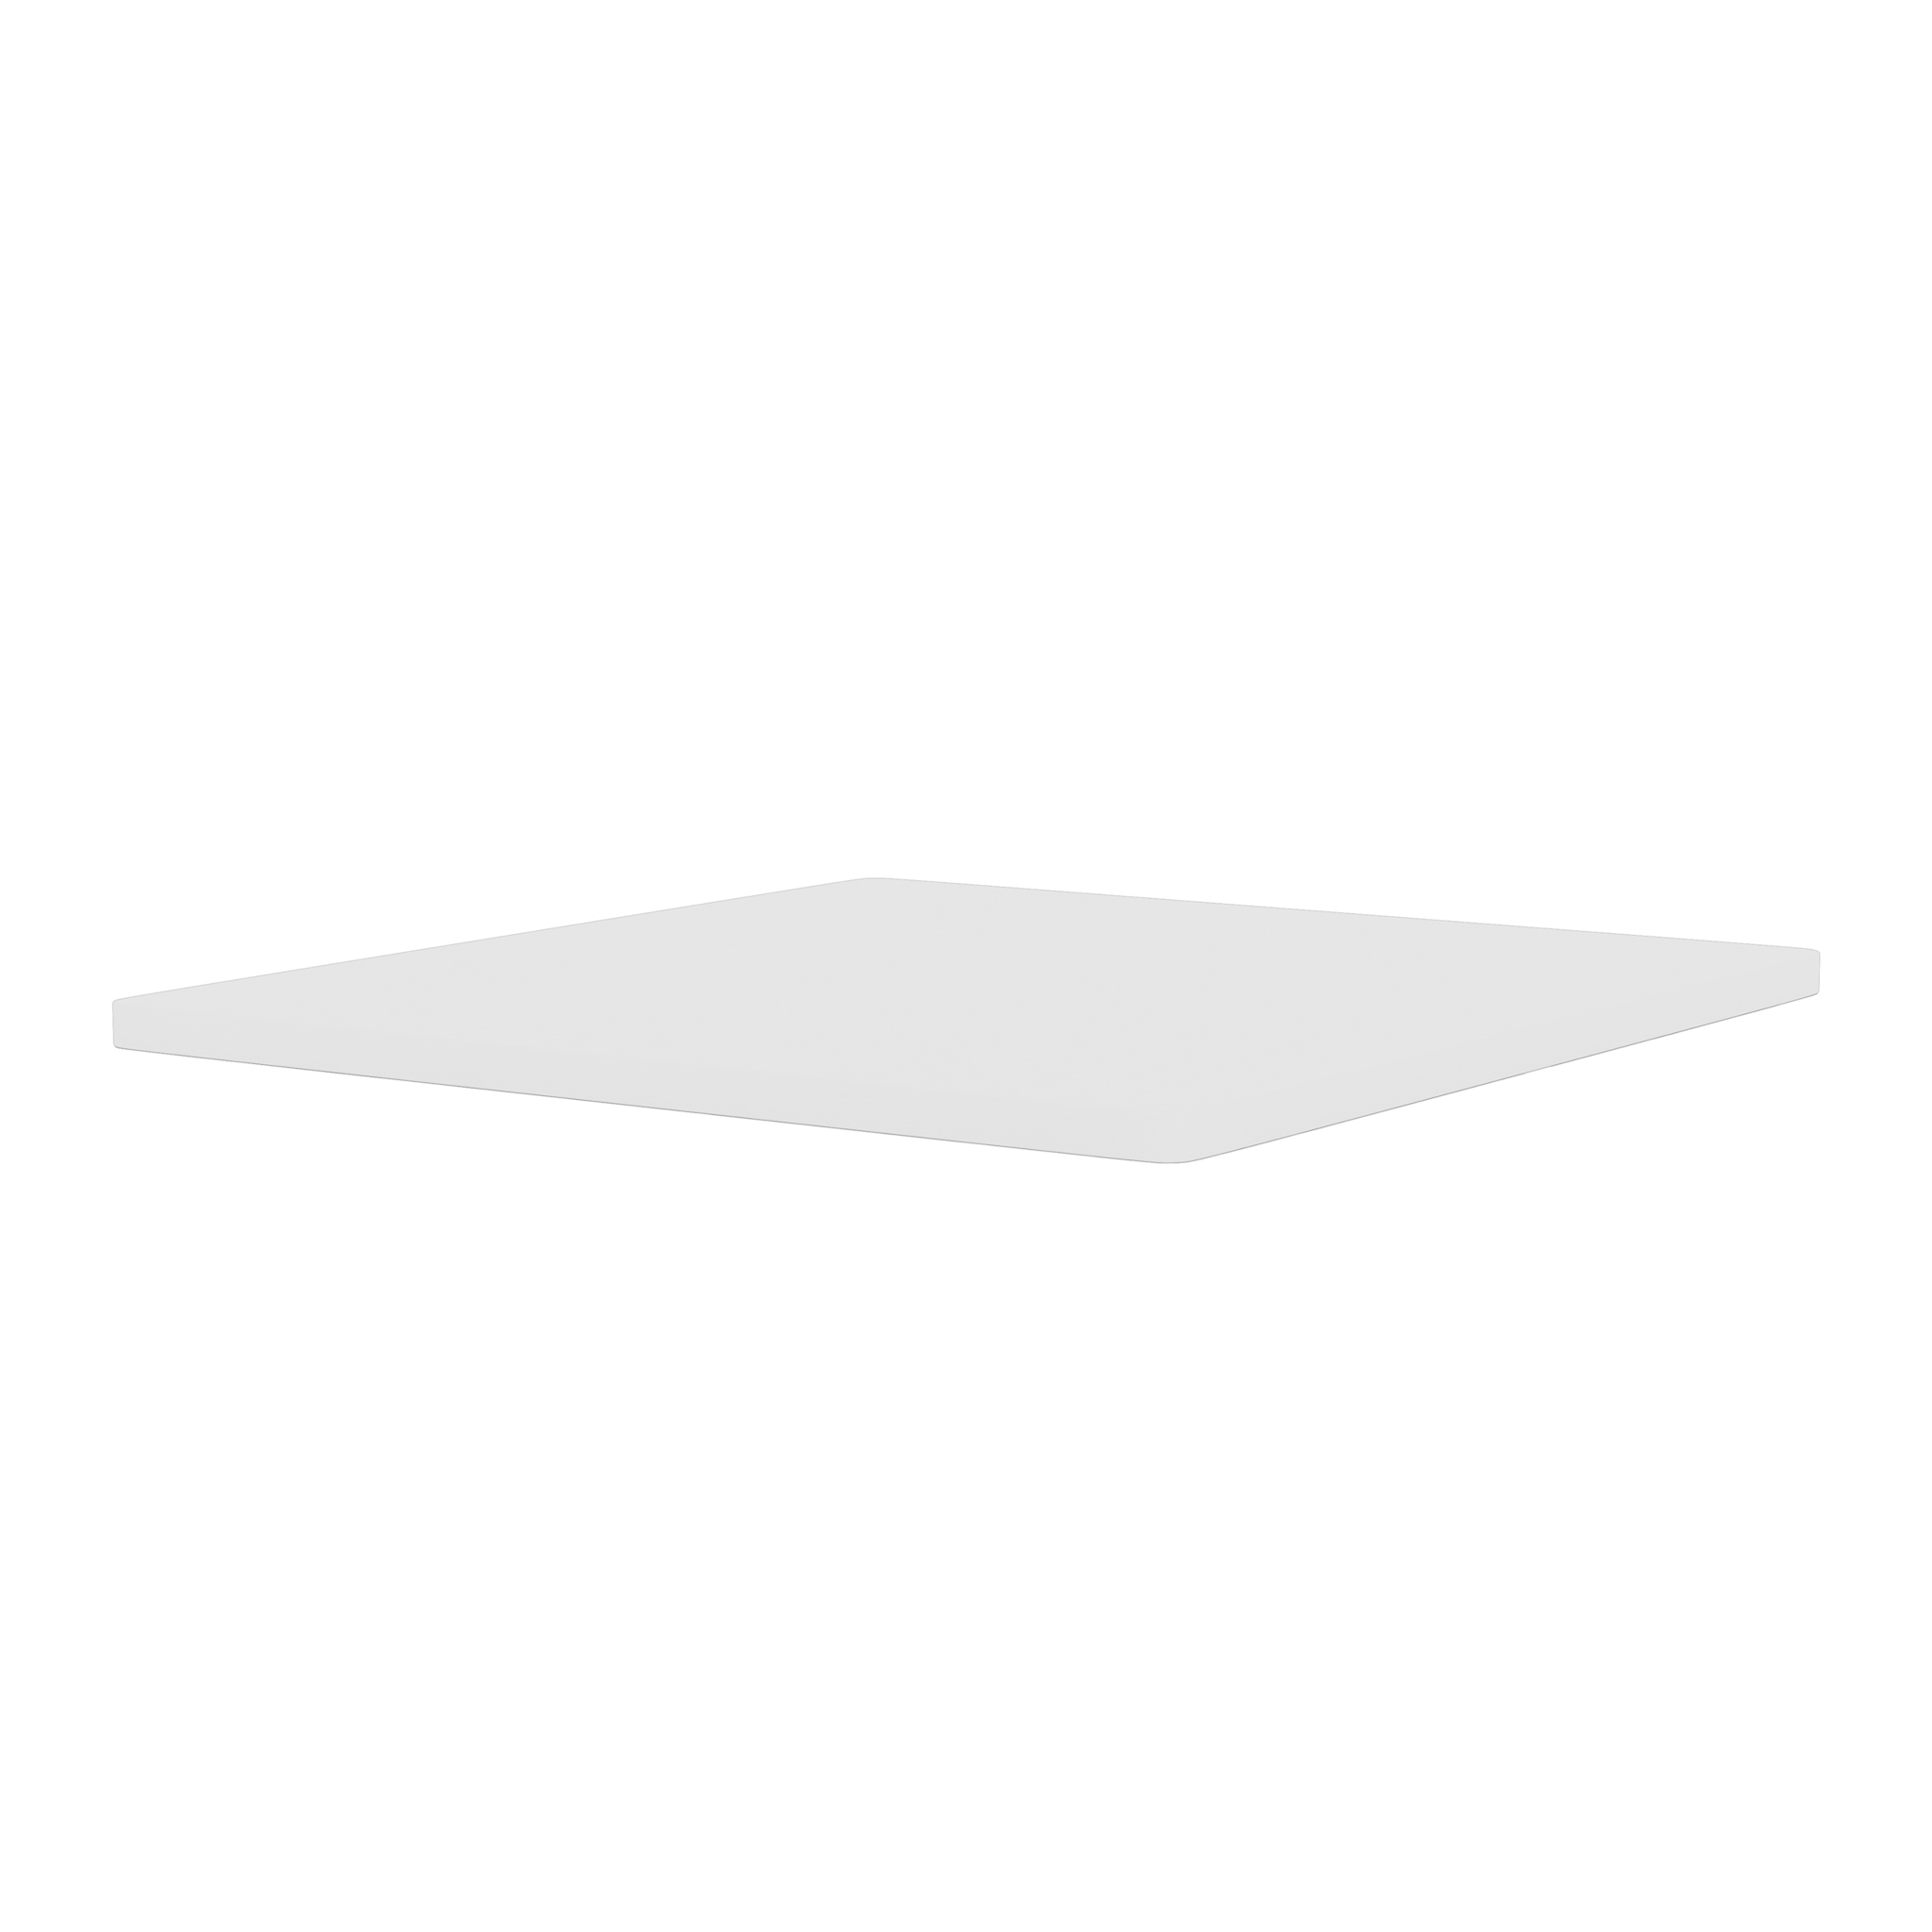 MONTANA // PANTON WIRE SINGLE INLAY SHELF - DEPTH 35cm | 101 NEW WHITE